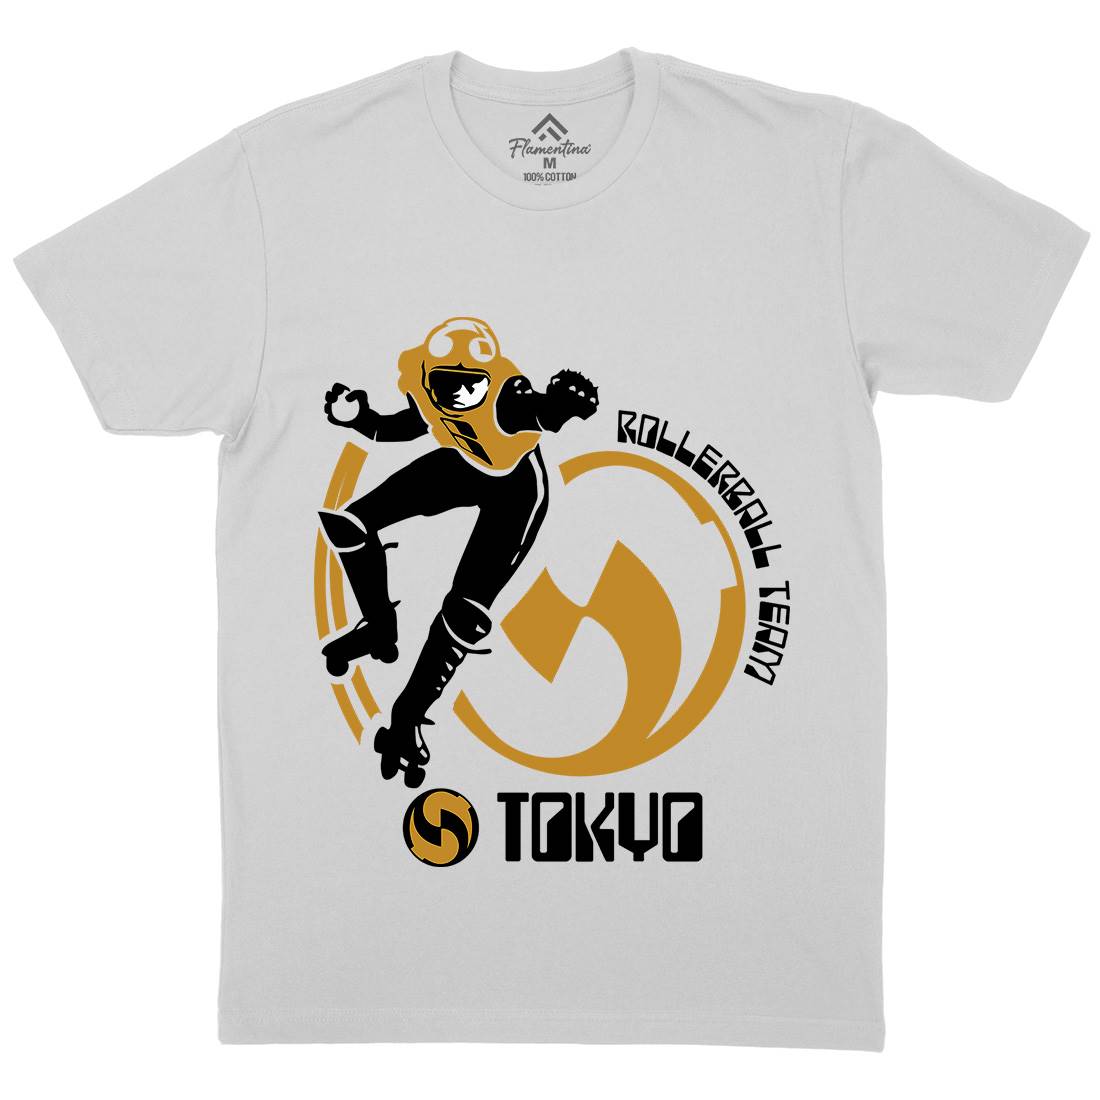 Tokyo Mens Crew Neck T-Shirt Sport D263